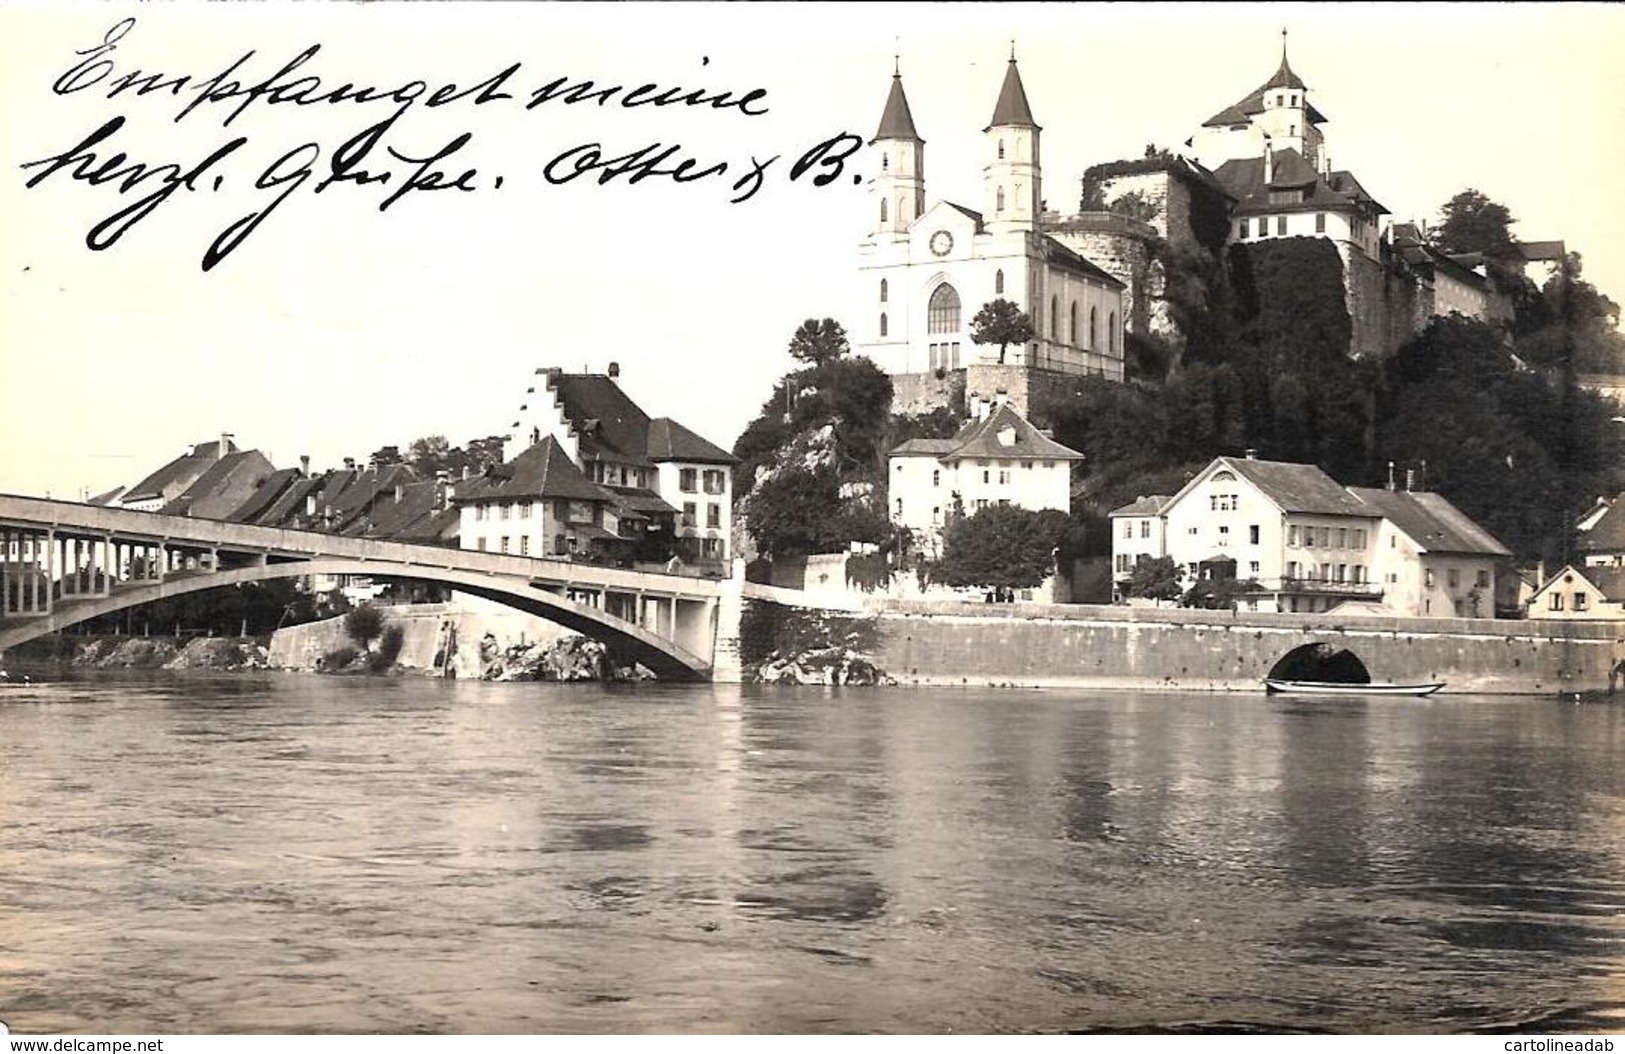 [DC12292] CPA - SVIZZERA - OLTEN - Viaggiata 1923 - Old Postcard - Olten